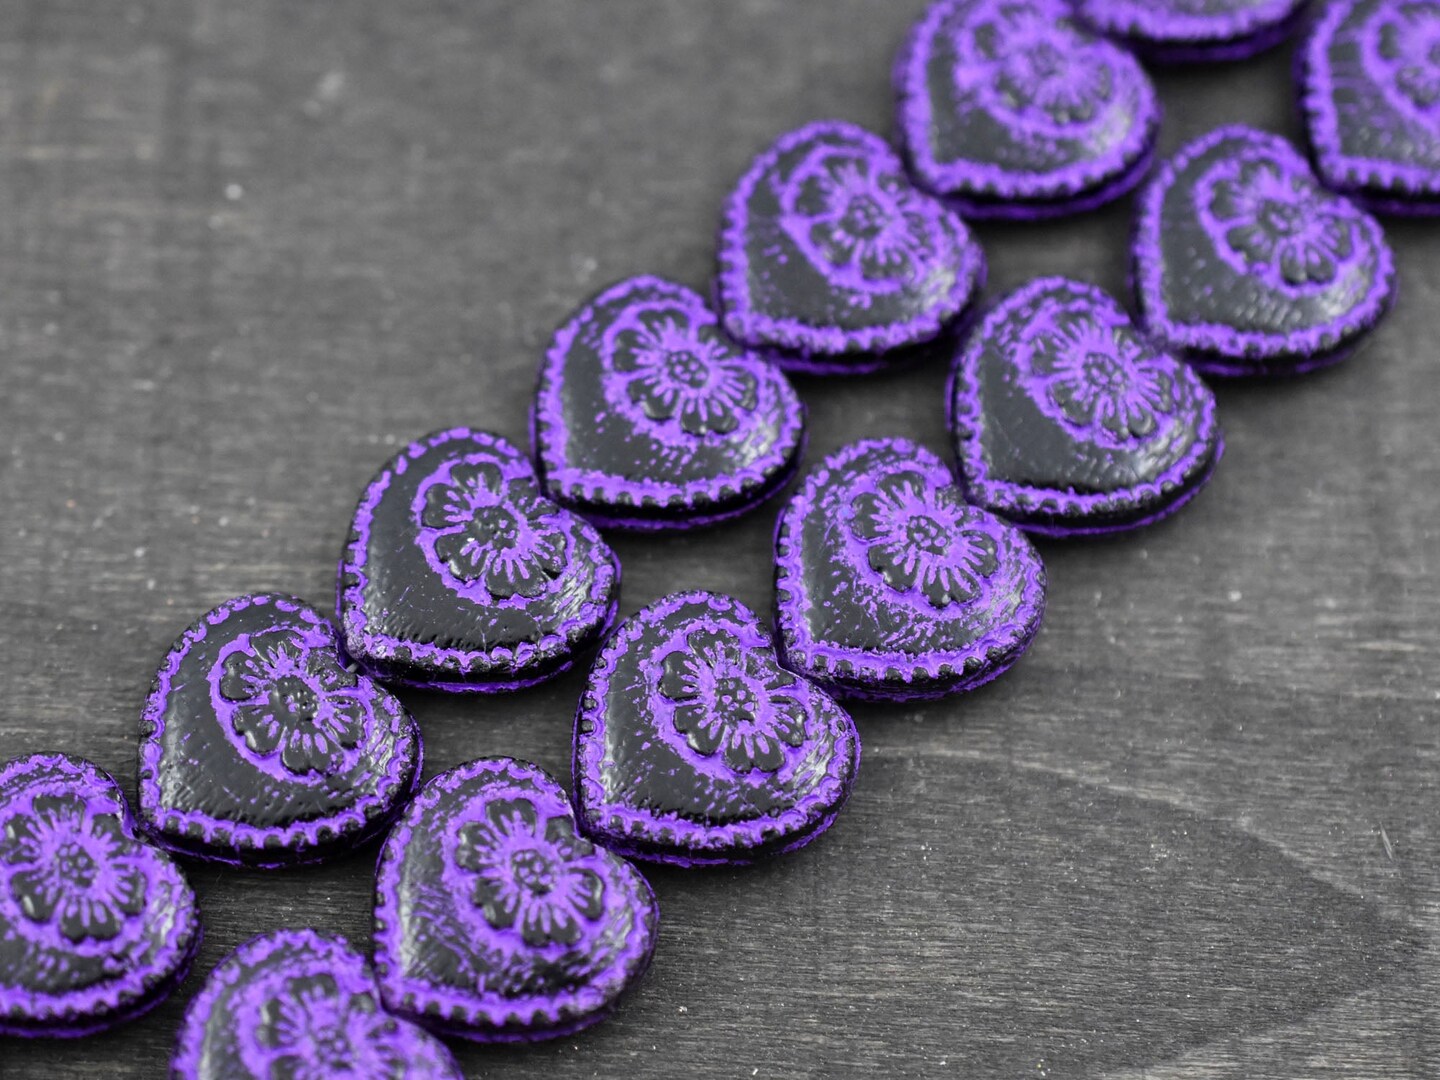 *4* 17mm Purple Washed Jet Black Floral Heart Beads